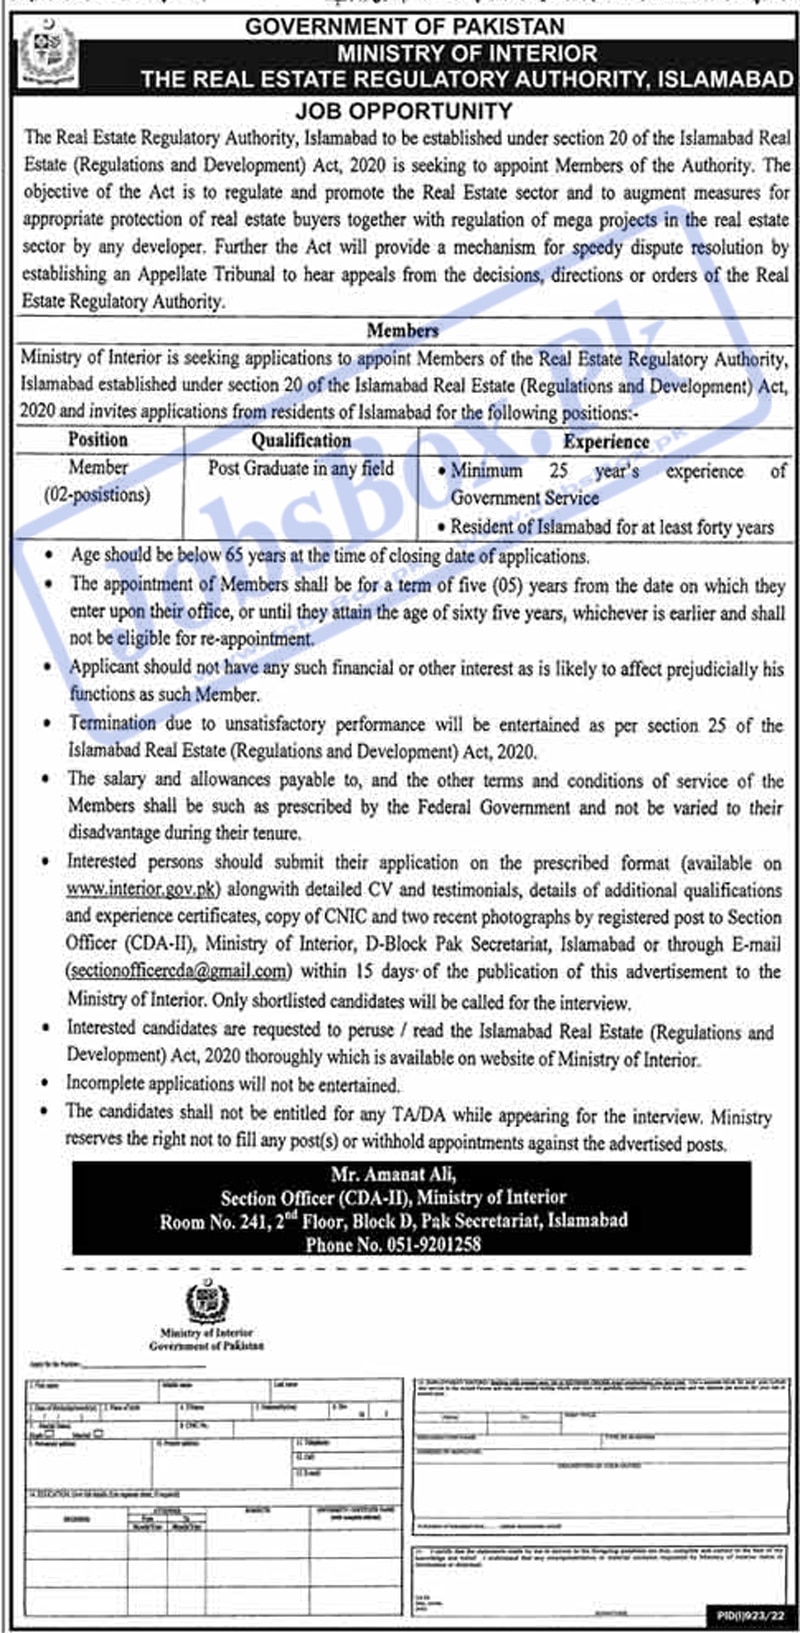 New Ministry of Interior Jobs 2022 - Application Form www.interior.gov.pk